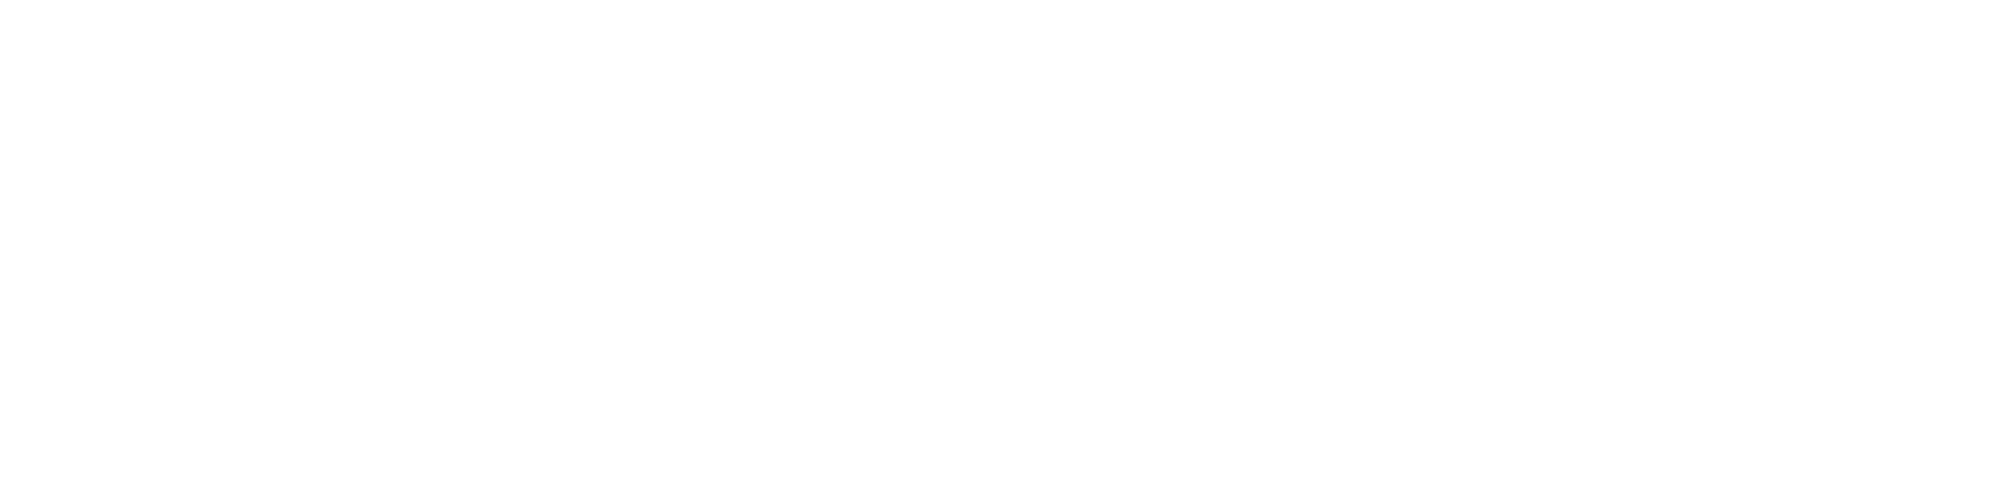 Badger Ballroom Dance Team